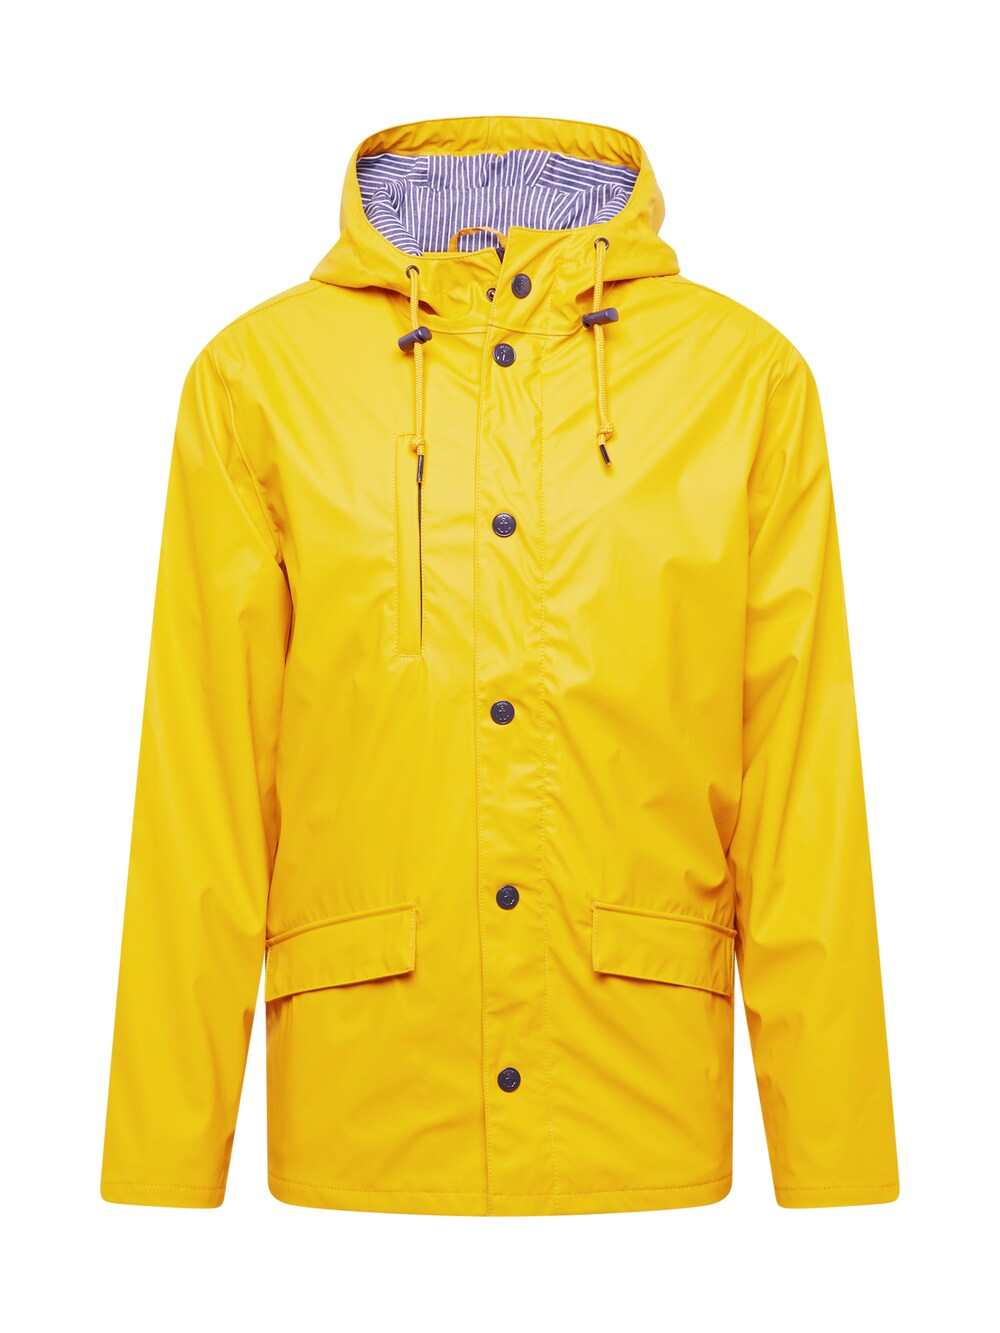 Межсезонная куртка Derbe Passby fisher, желтый